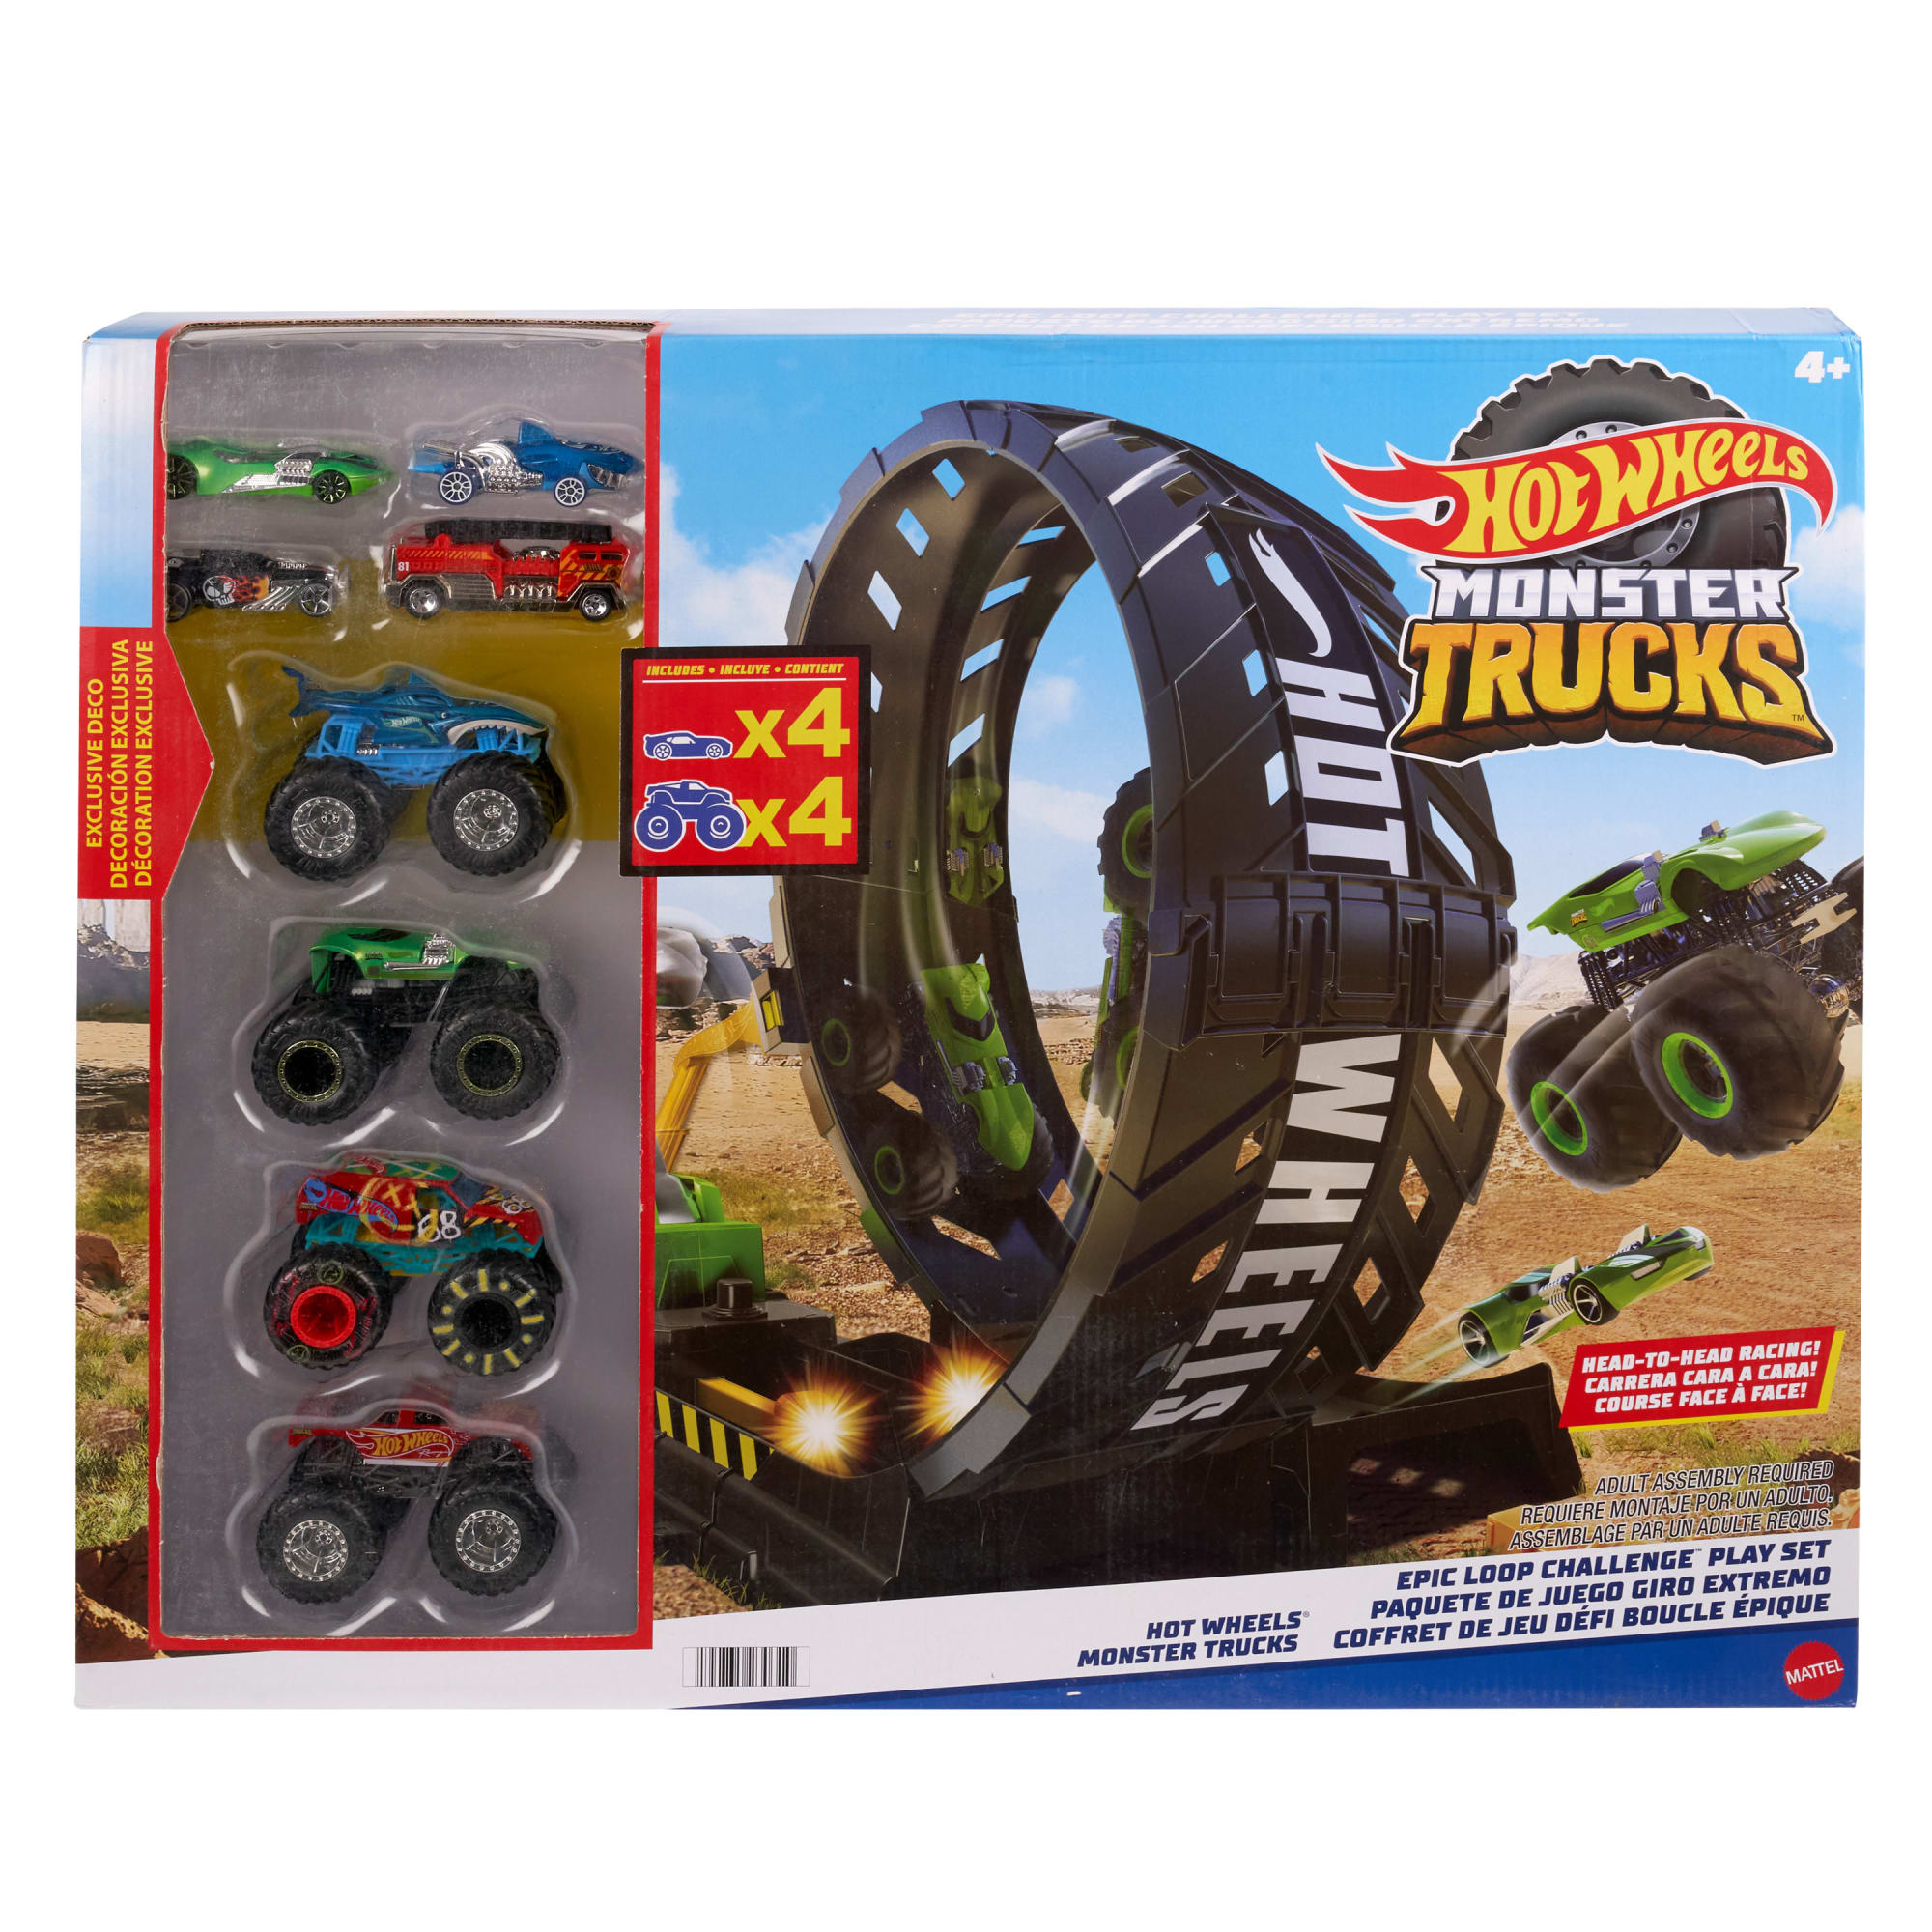 Hot Wheels Monster Trucks 1:24 Scale Bone Shaker Truck Play Vehicle 